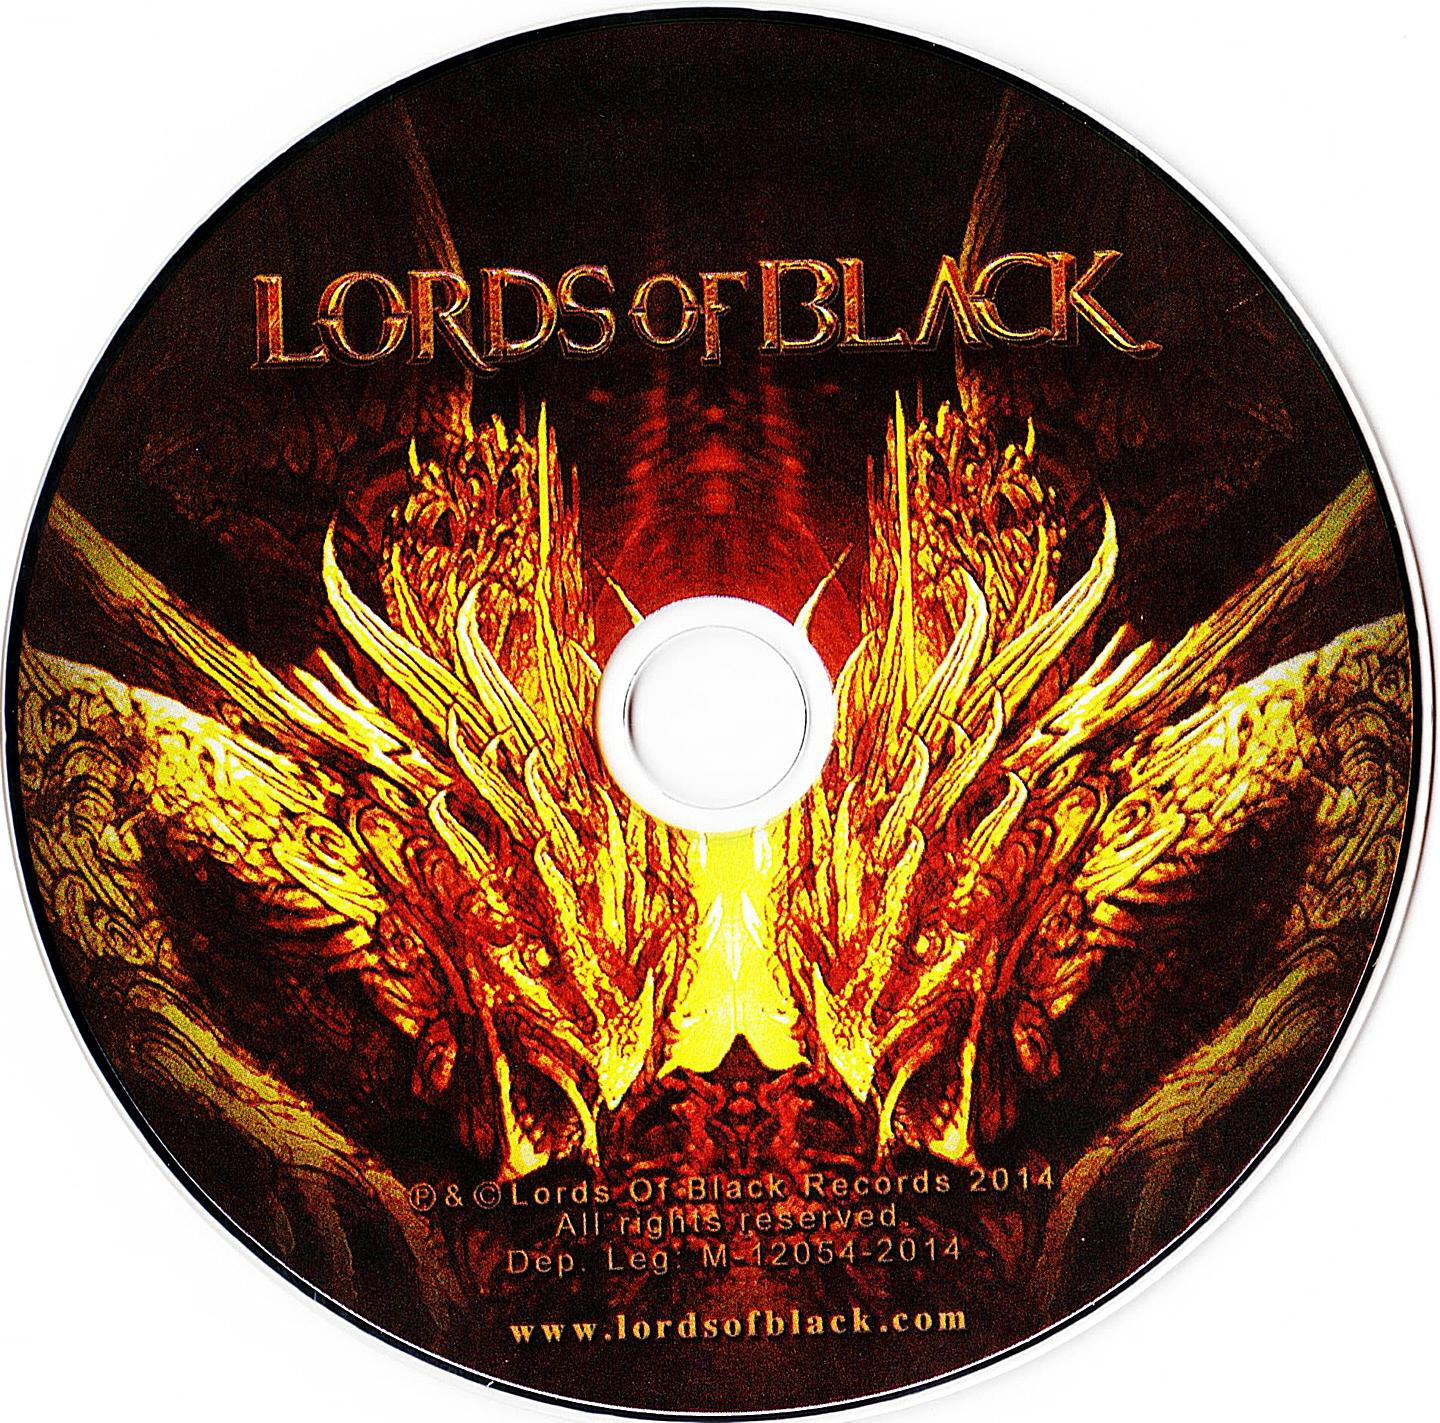 Lords of black mechanics of predacity. Lords of Black группа. Lords of Black 2014. Lords of Black дискография. Lords of Black Lords of Black.